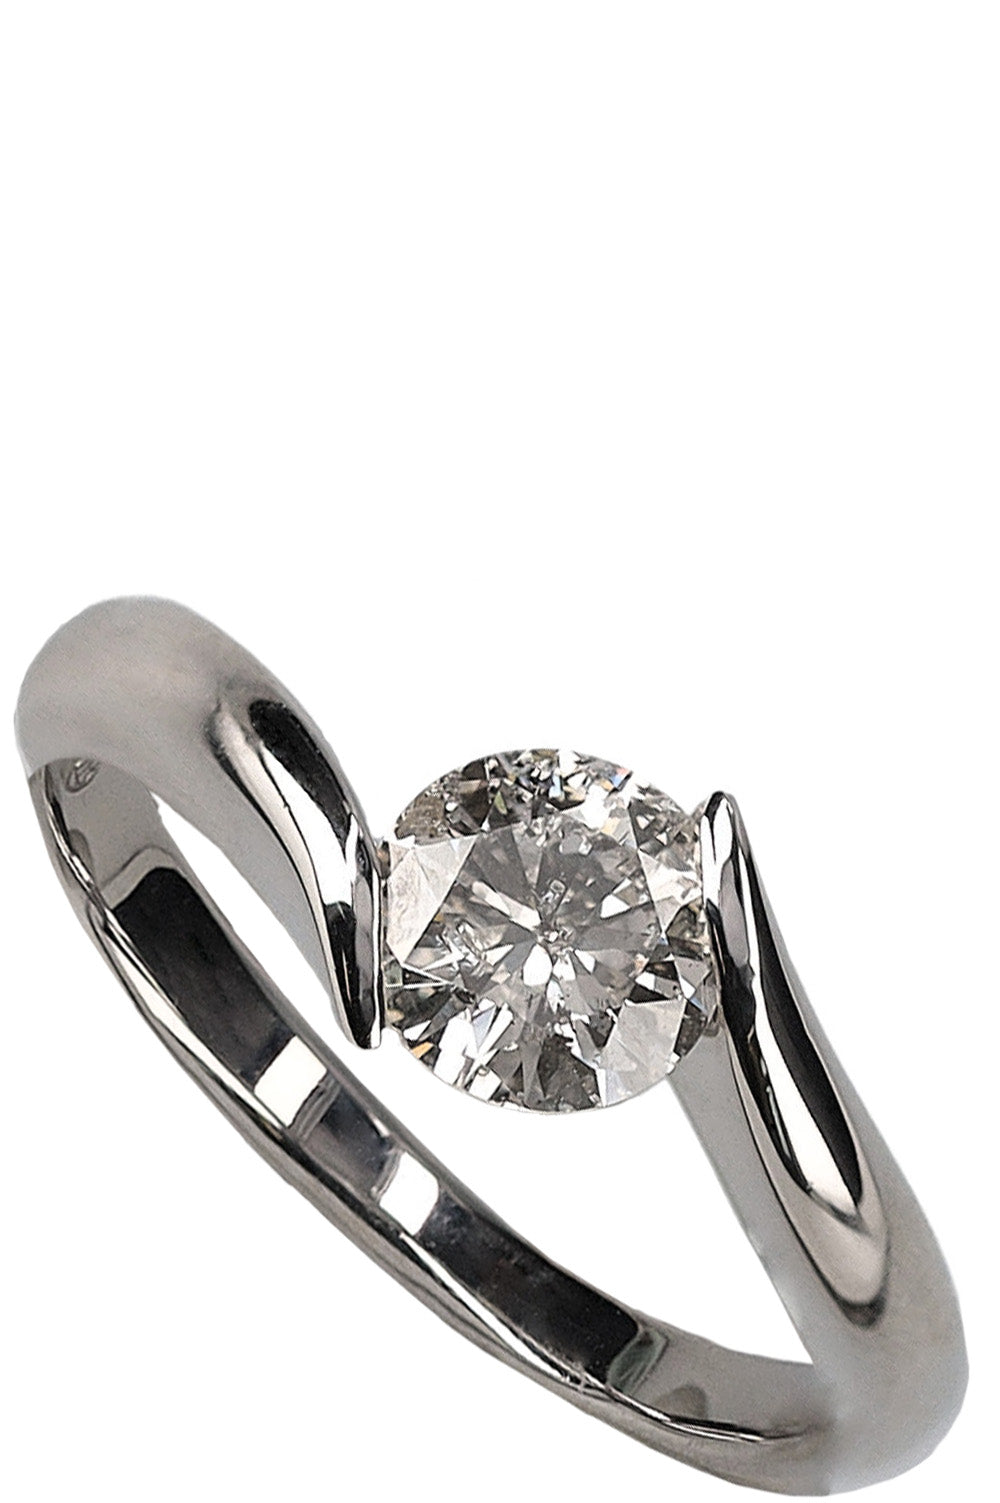 VINTAGE JEWELRY Engagement Ring Diamond White Gold